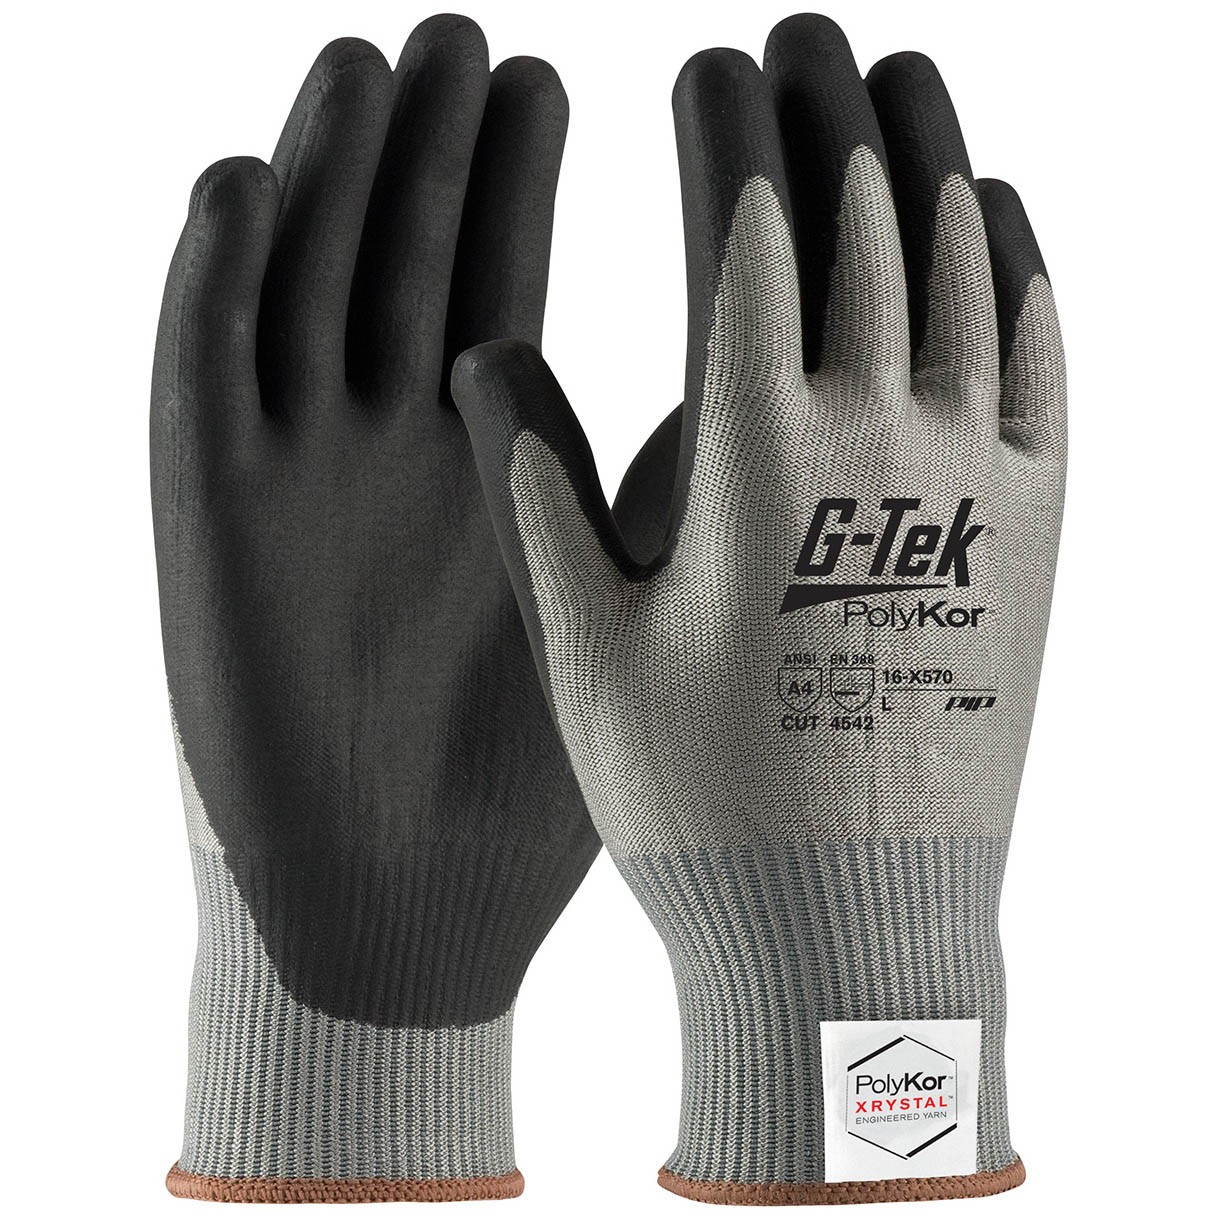 PIP - G-Tek Seamless Knit PolyKor Xrystal Gloves - NeoFoam Coated Grip - Large - 16-X570